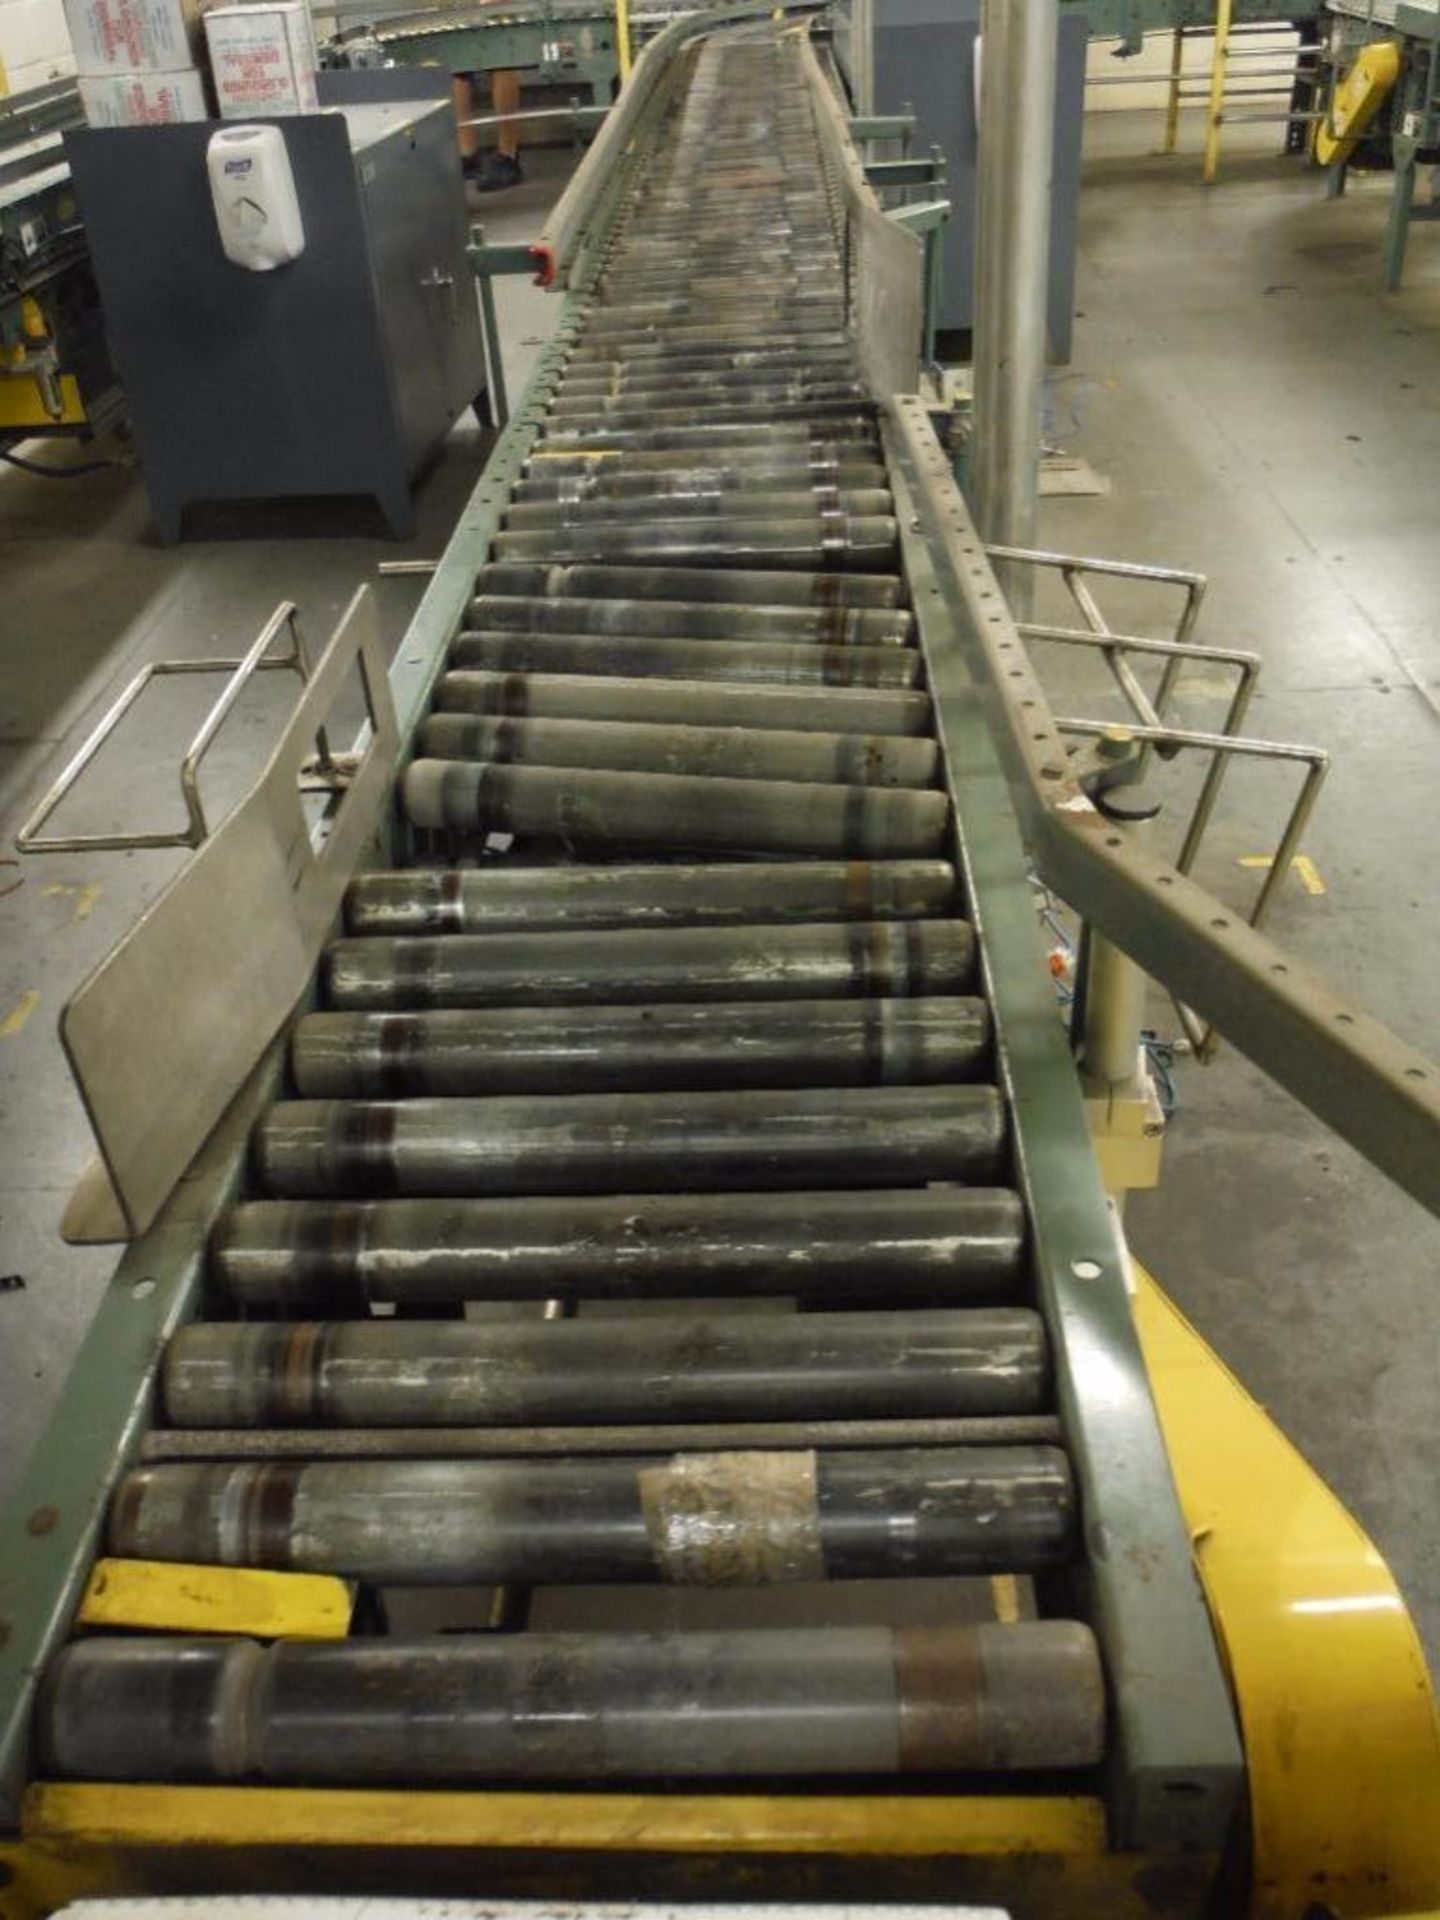 Hytrol 45 degree powered roller conveyor, 25 ft. long x 15 in. wide, motor and drive, mild steel - Image 3 of 6